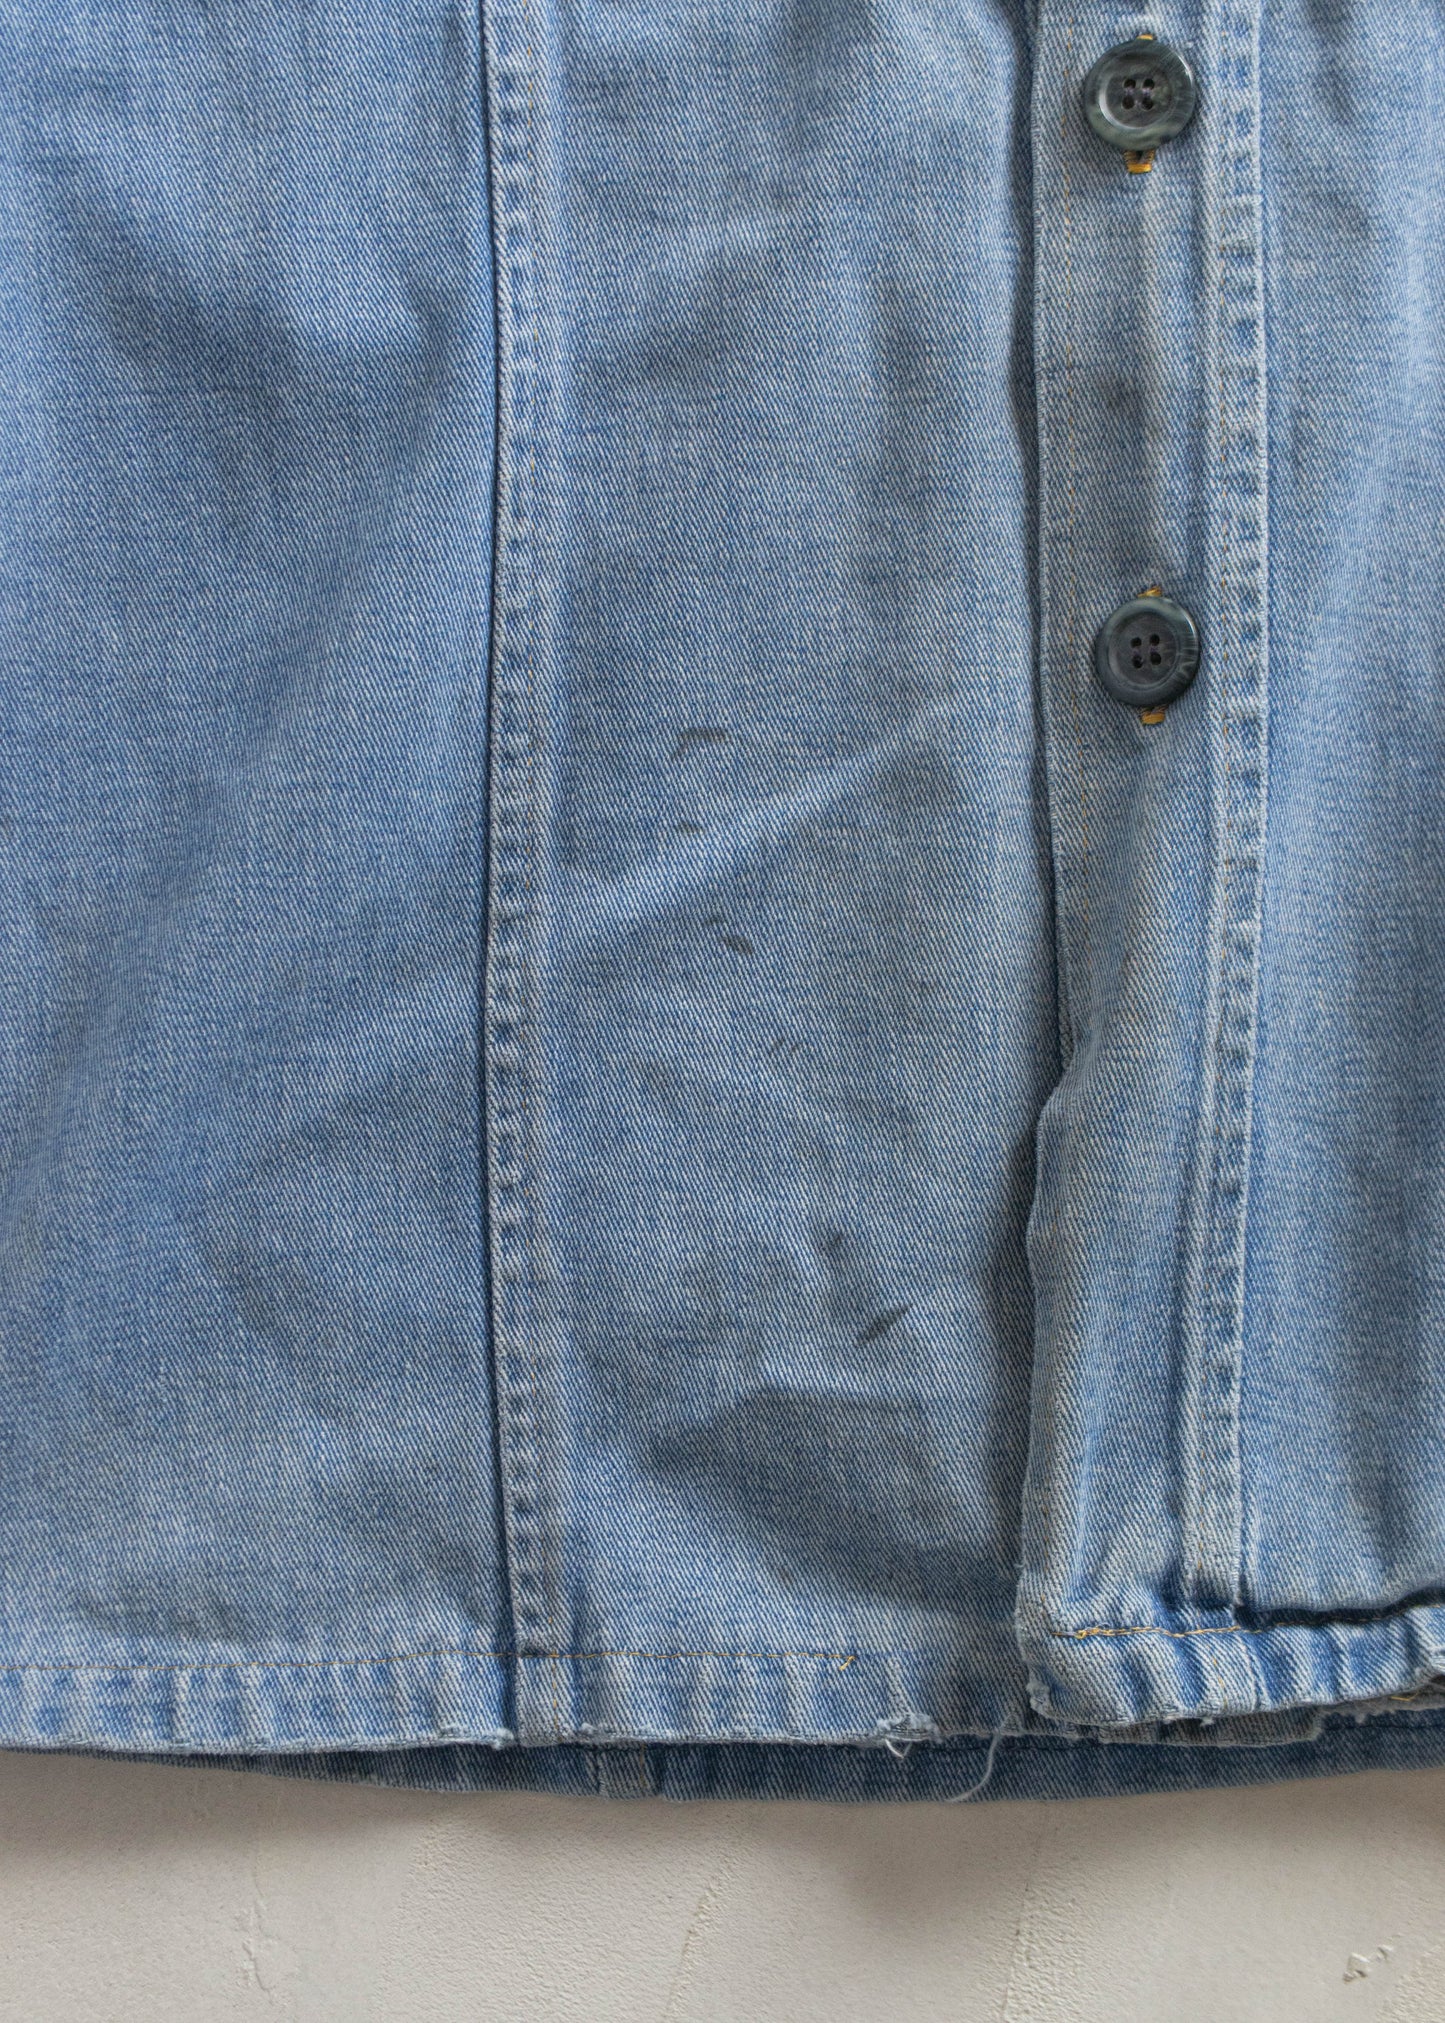 Vintage 1970s GWG Denim Button Up Shirt Size M/L